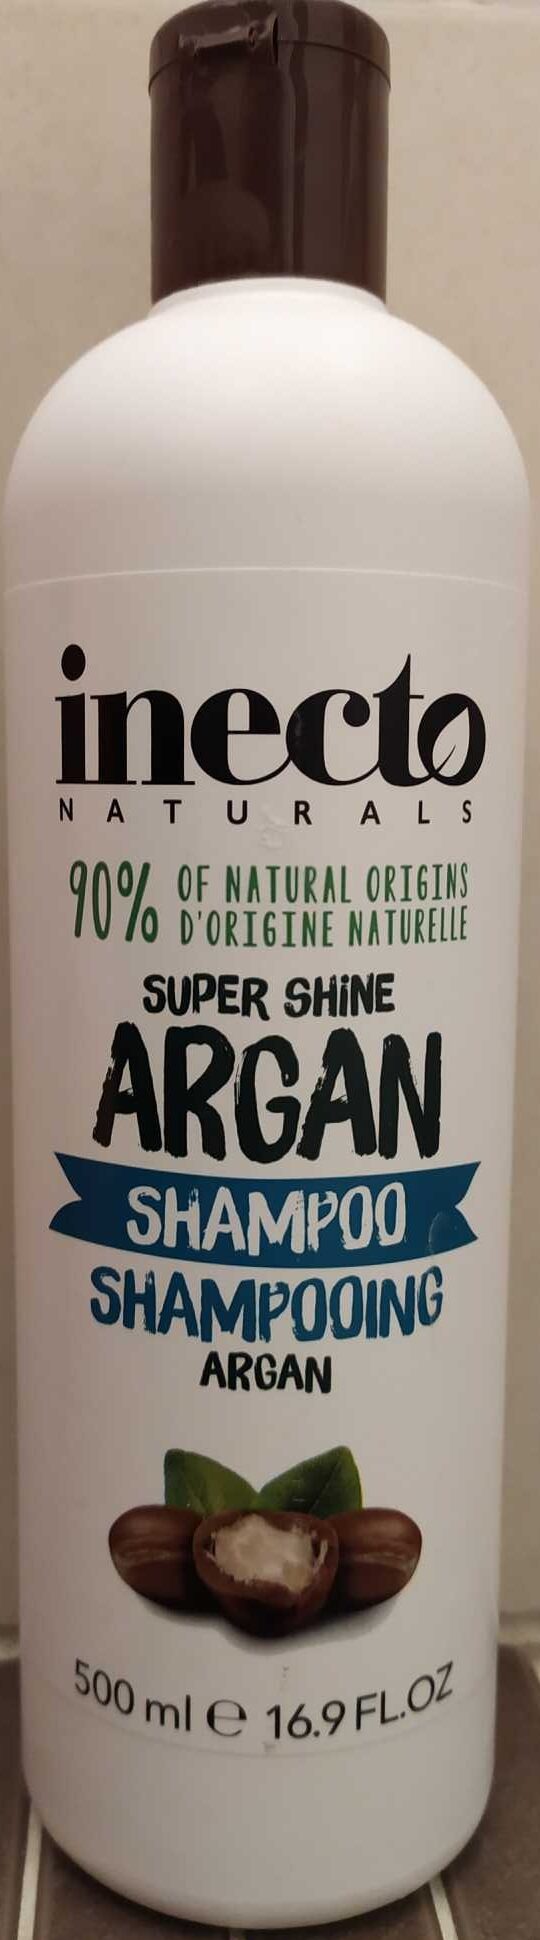 Shampoing ARGAN - מוצר - fr